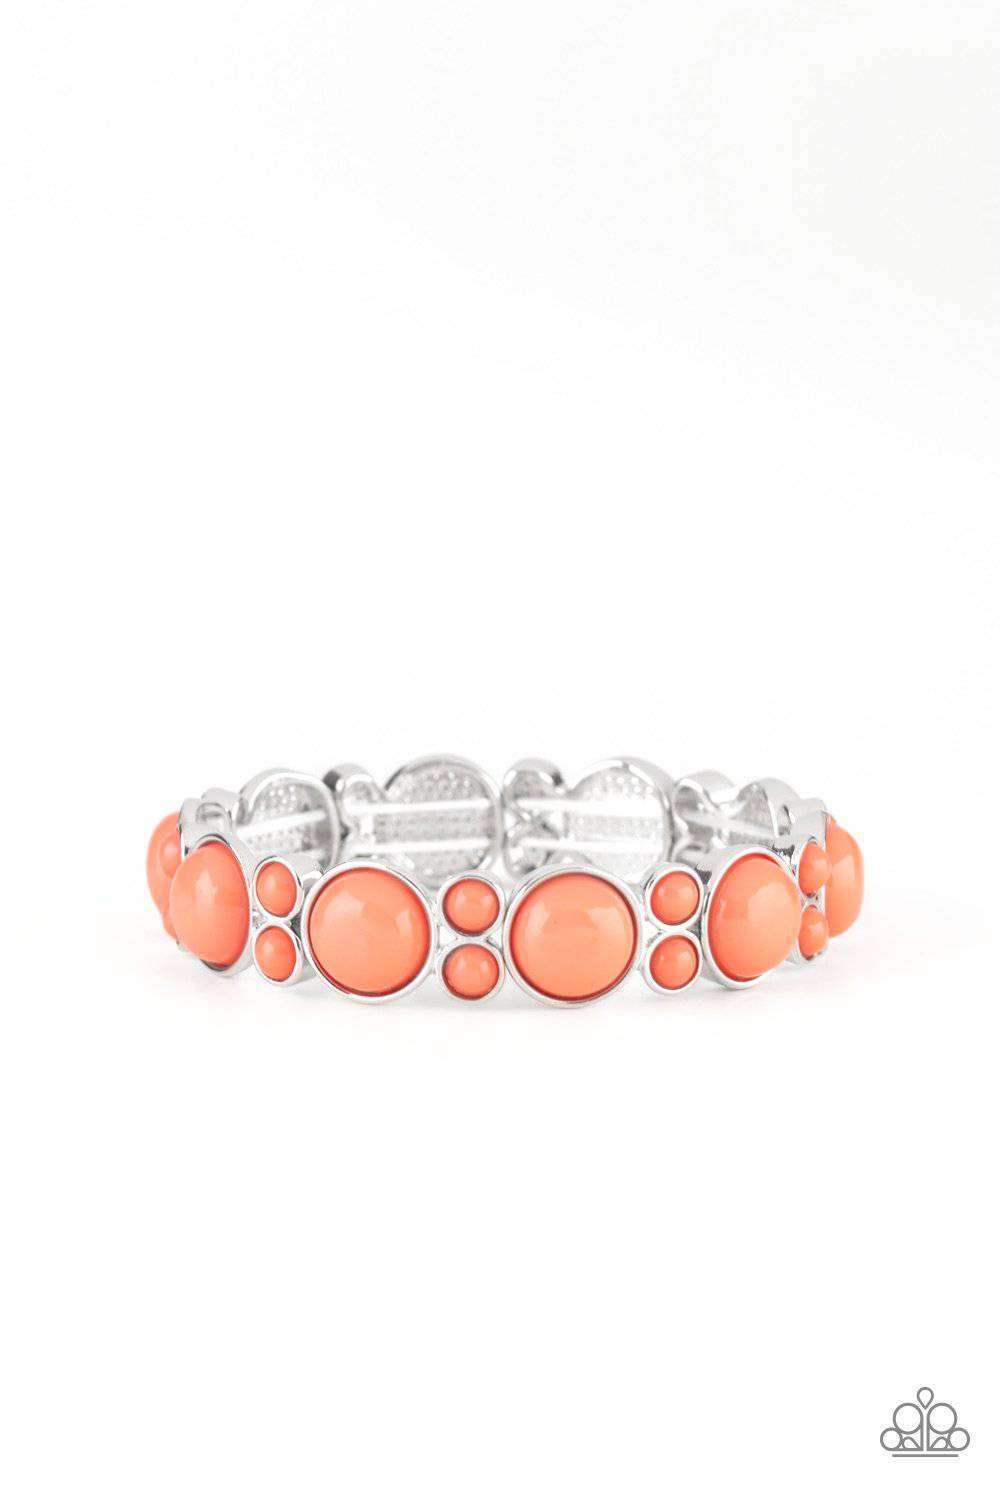 B215 - Bubbly Belle Orange Bracelet by Paparazzi Accessories on Fancy5Fashion.com